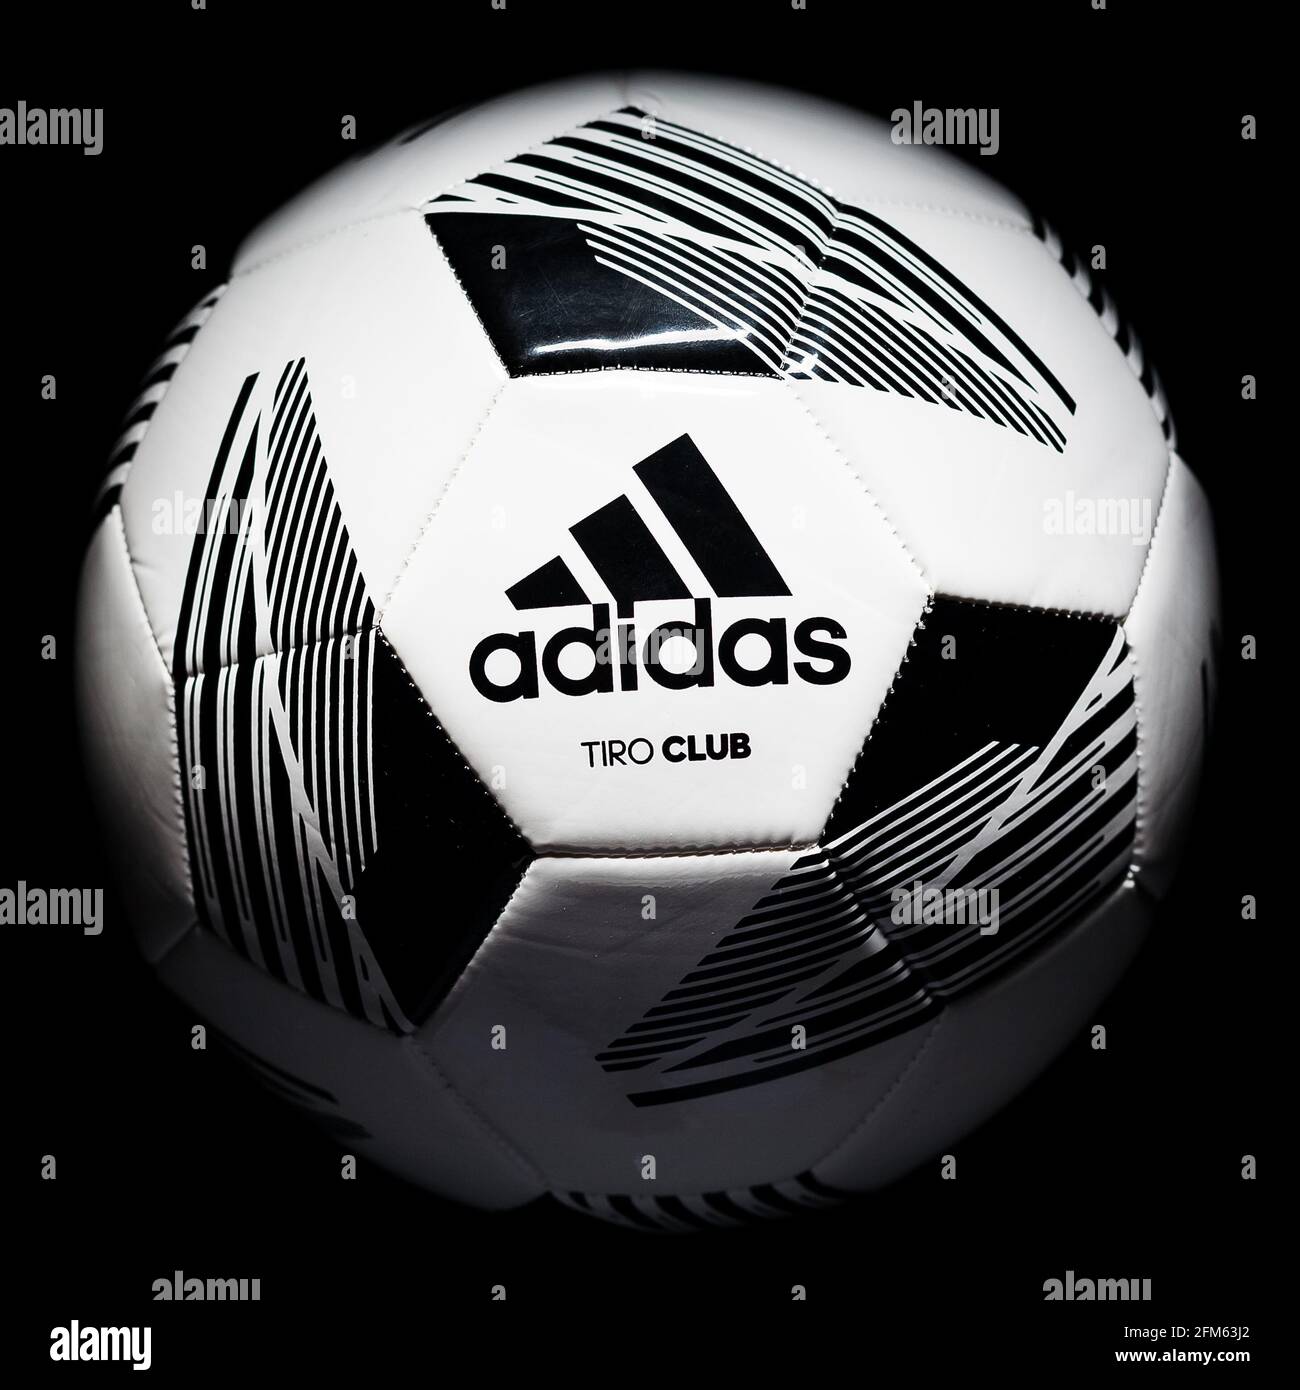 Fútbol, balón de fútbol Adidas Tiro Club sobre fondo negro. Logotipo de la  marca adidas Fotografía de stock - Alamy